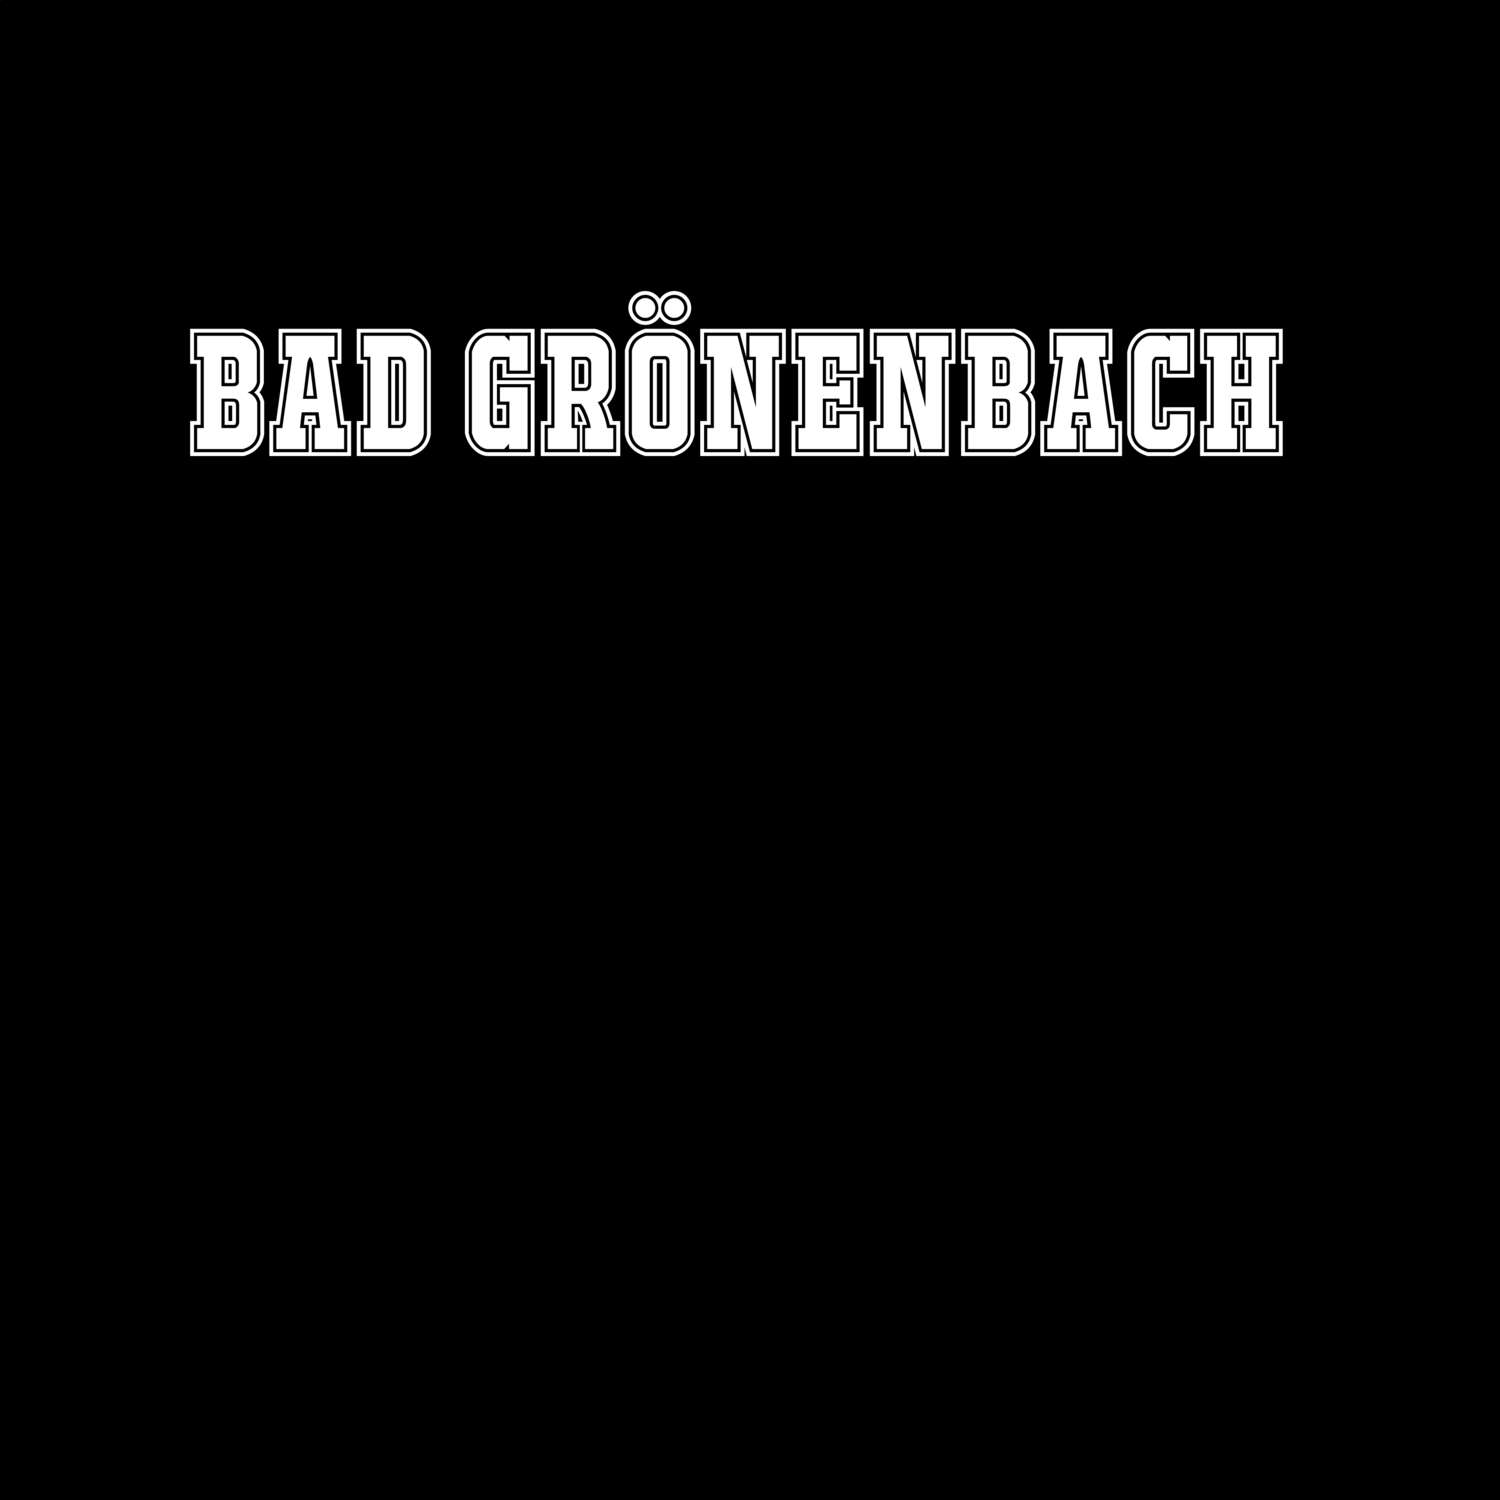 Bad Grönenbach T-Shirt »Classic«